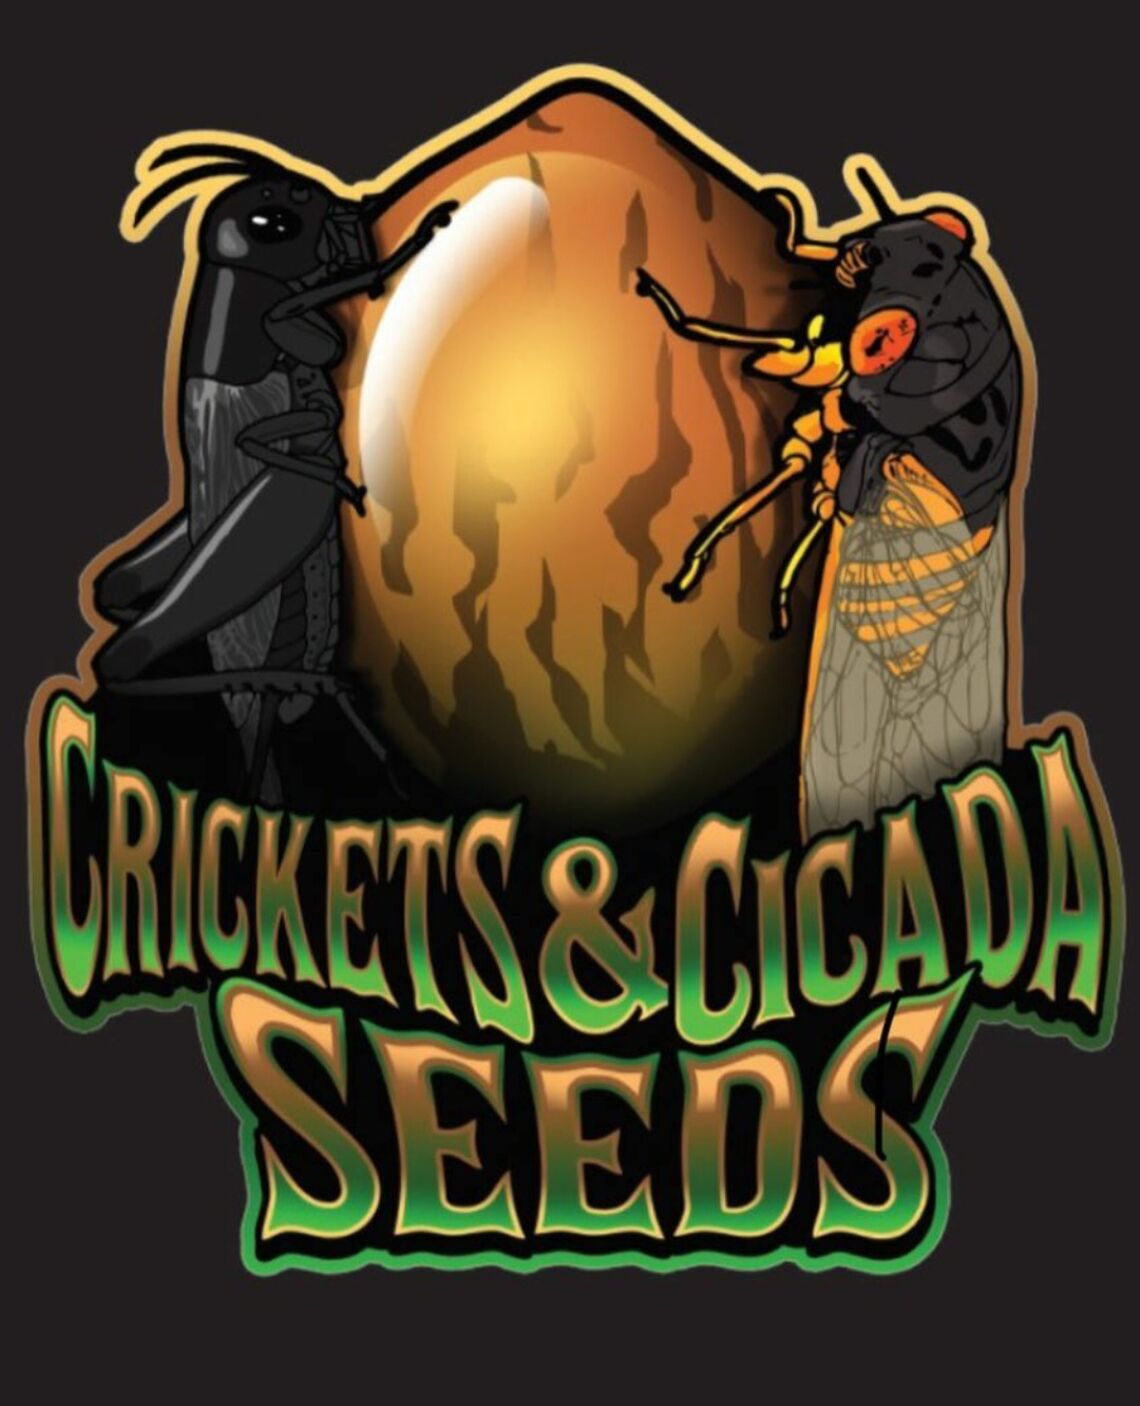 crickets and cicada seeds